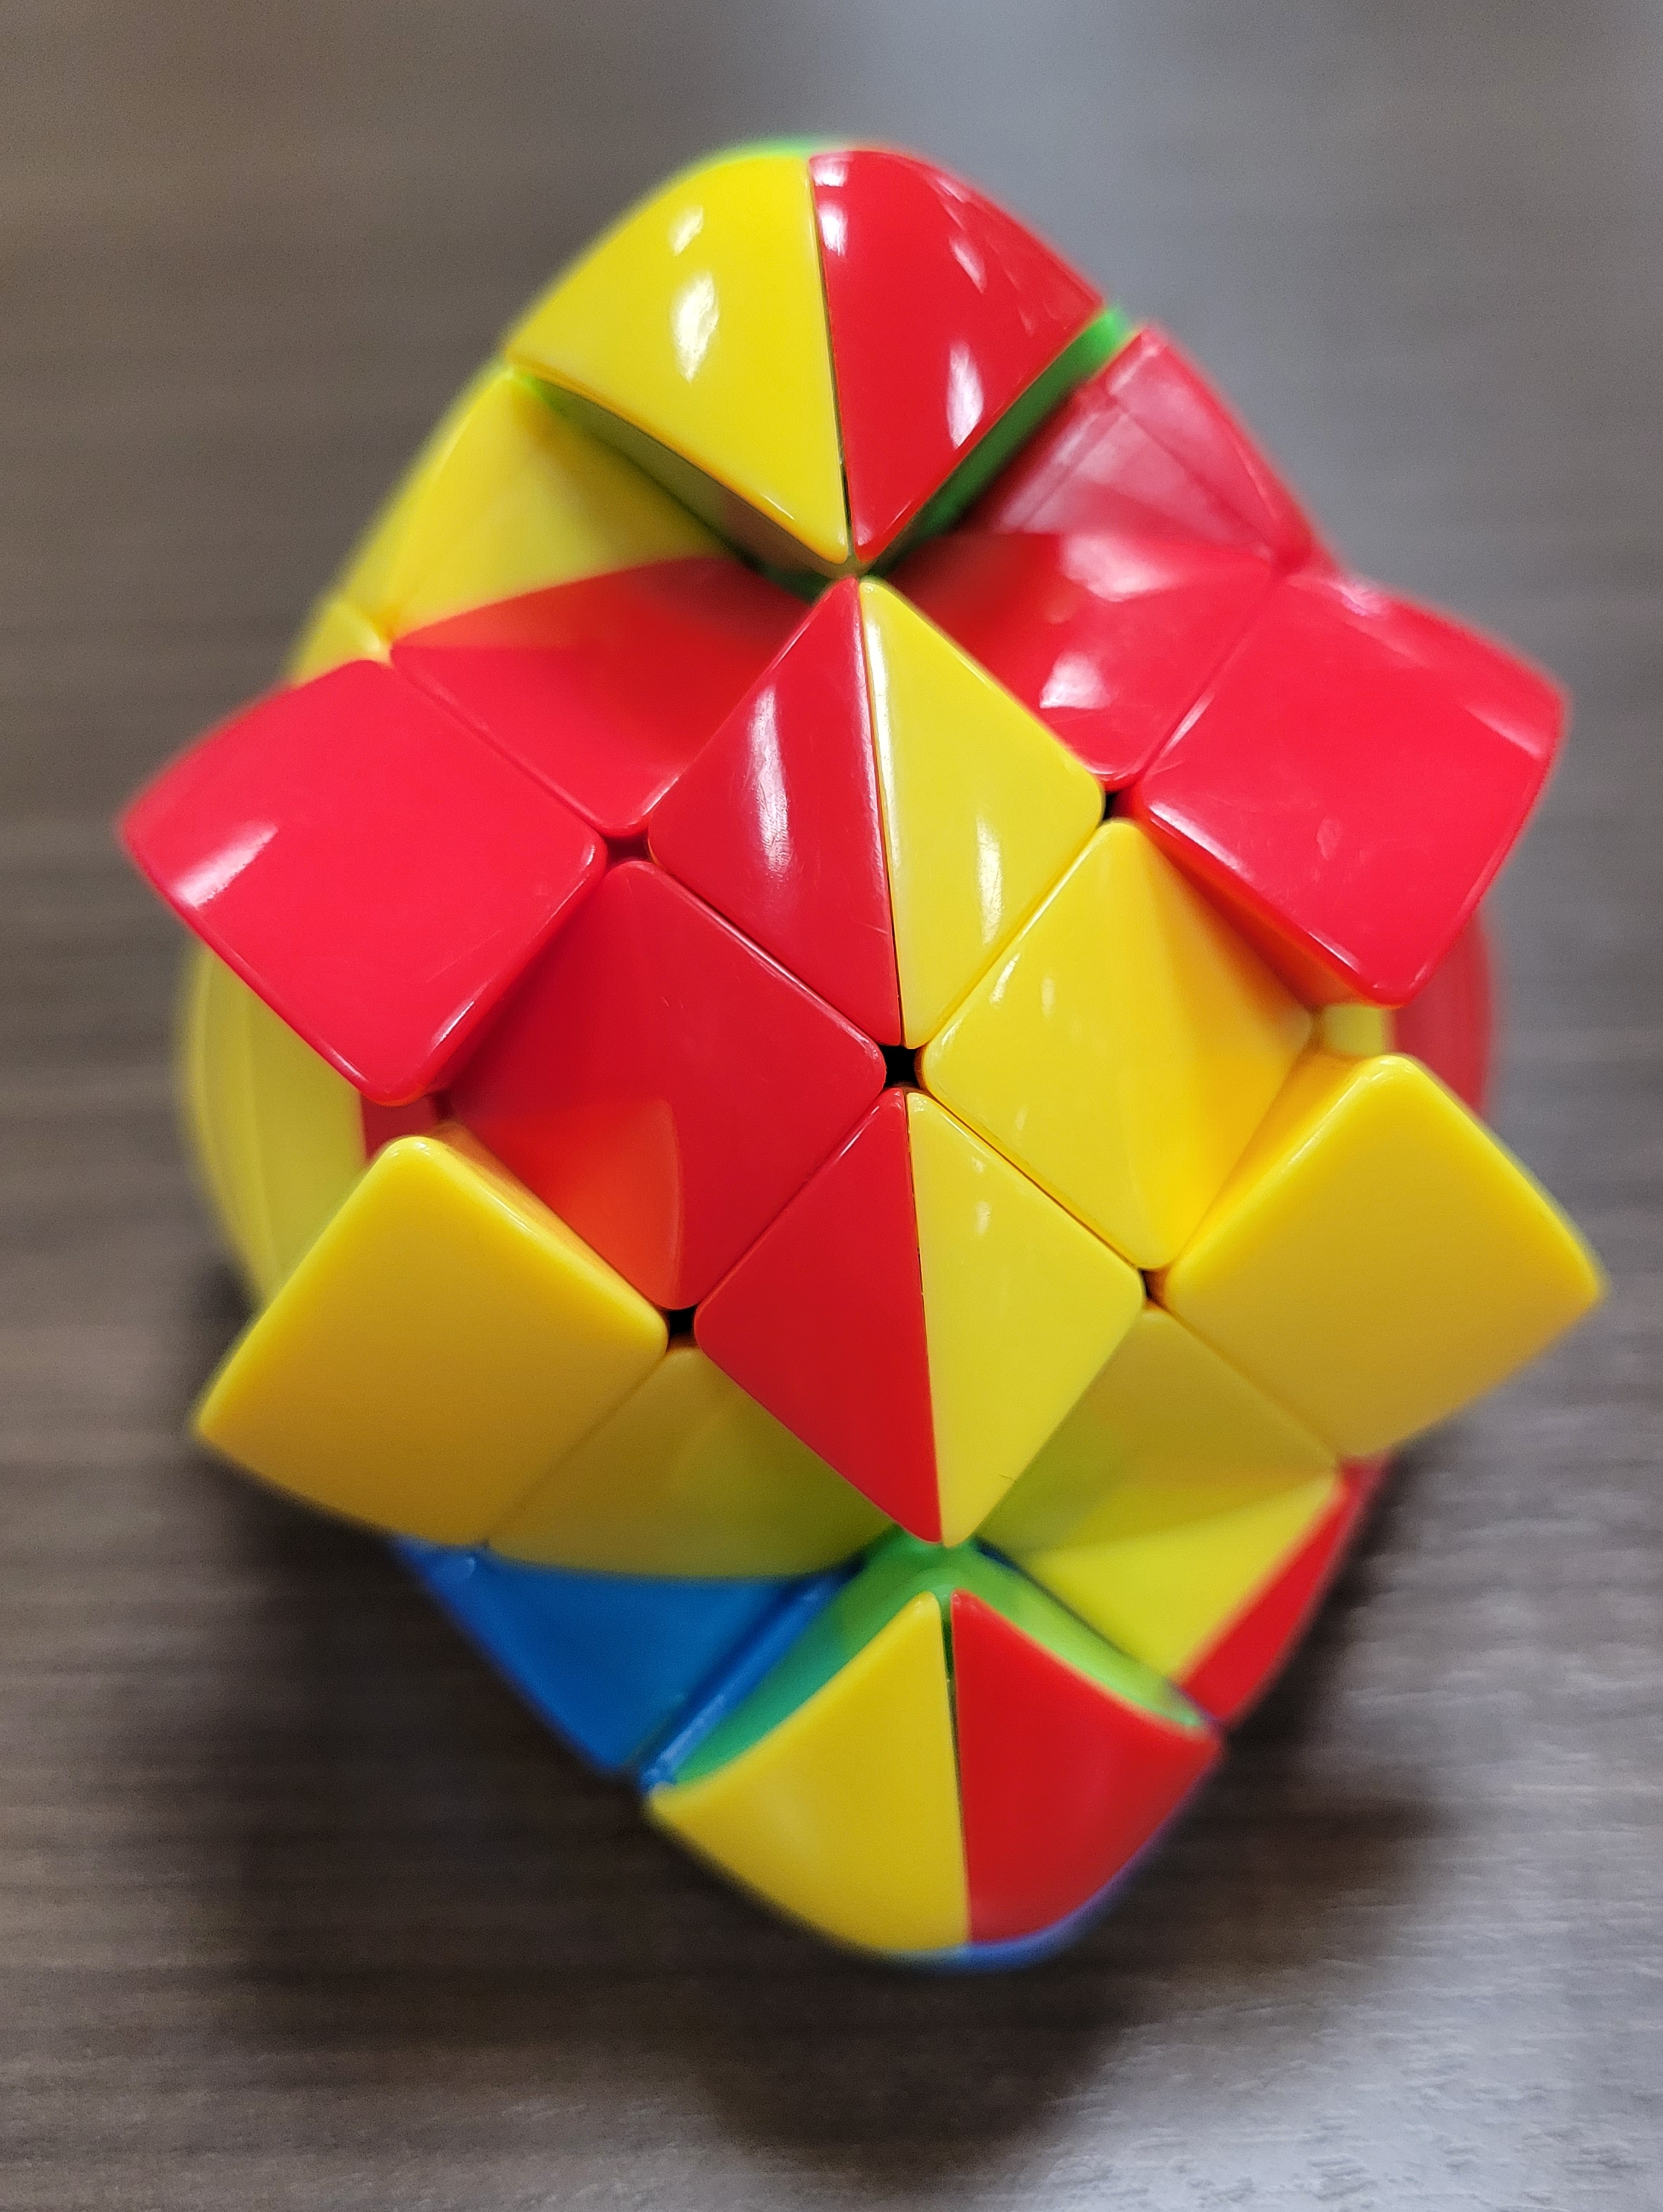 4x4 megamorphix with edges rotated 90 degrees around the last layer center